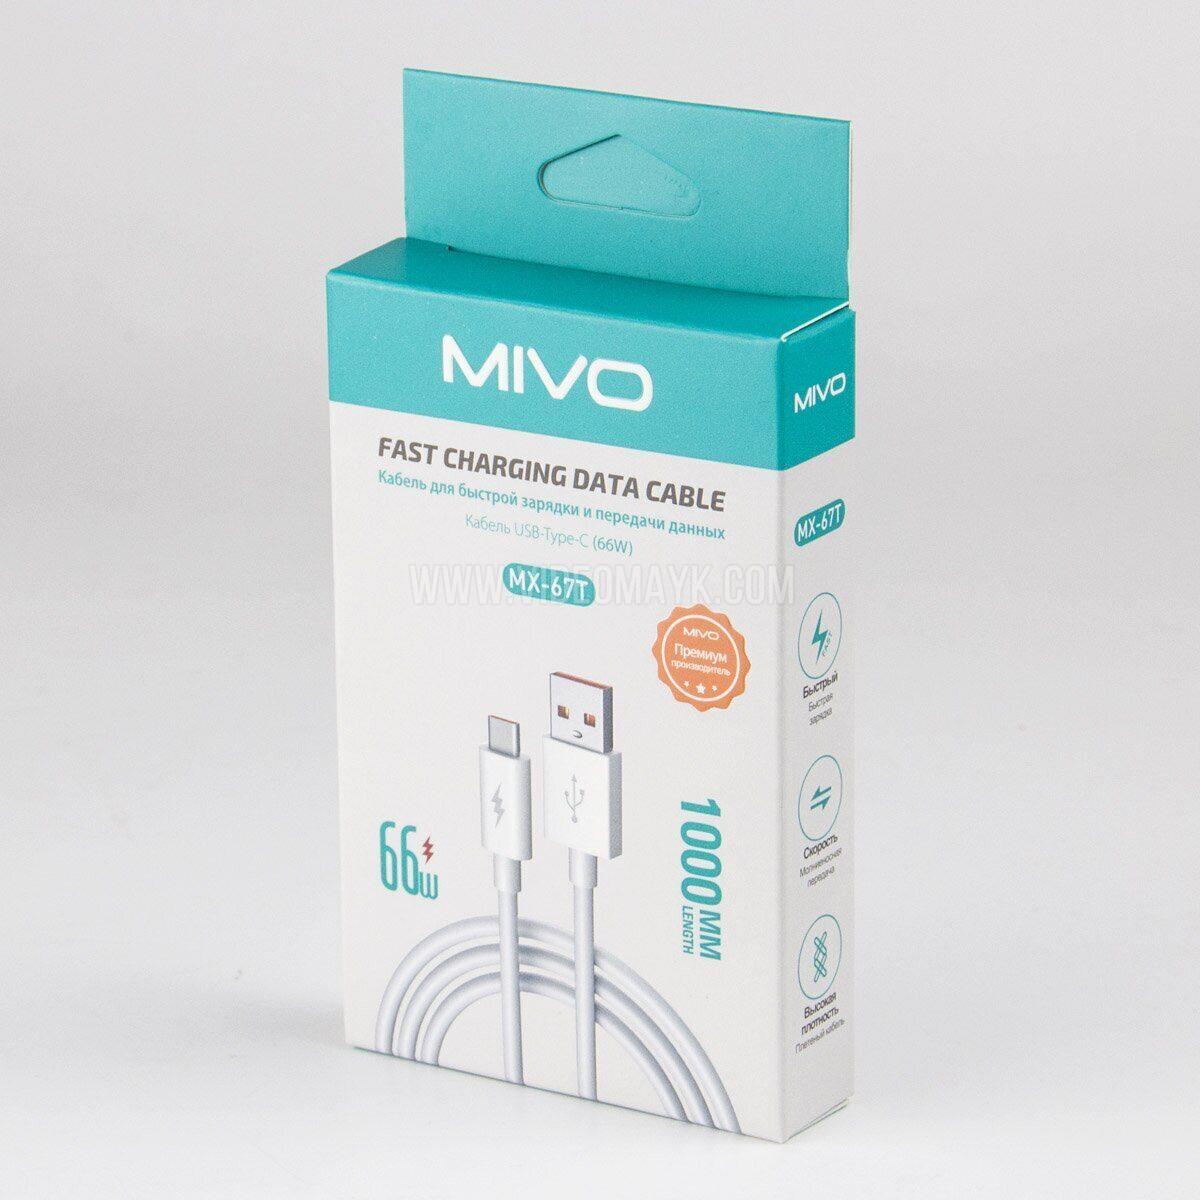 Кабель USB-Type-C (66W) Mivo MX-67T, силиконовый, 1м